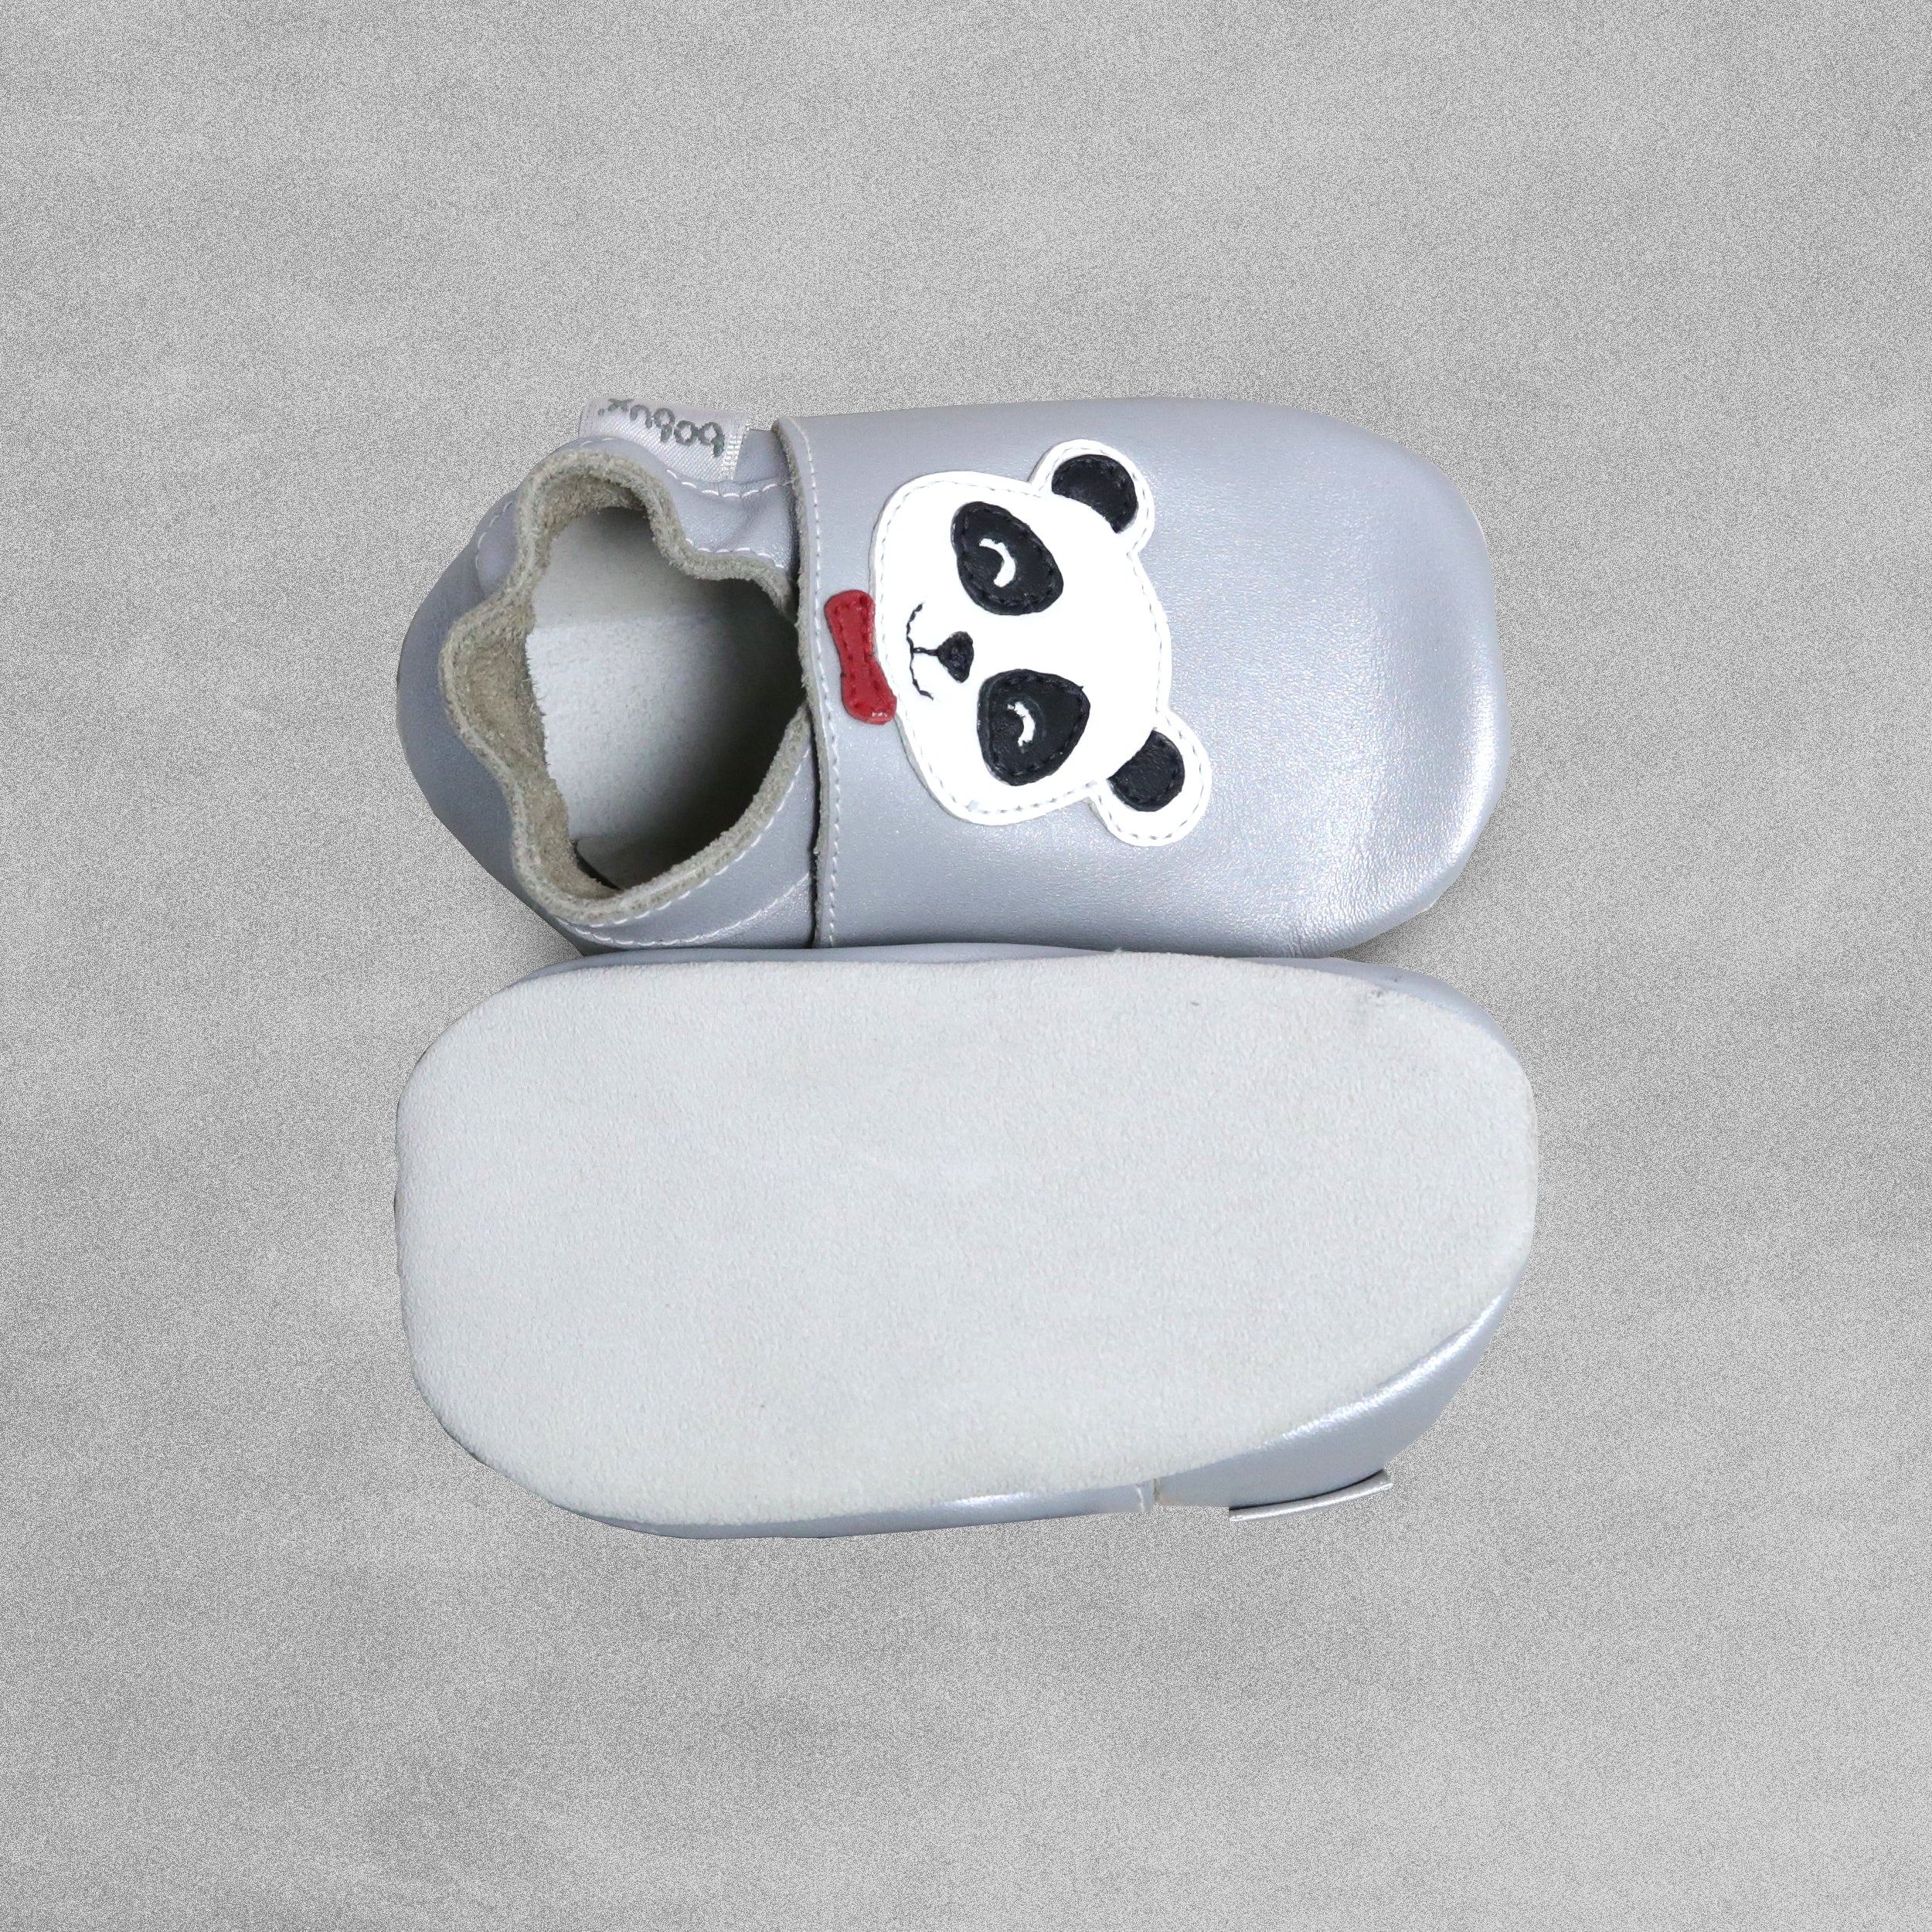 Bobux Soft Sole Baby Shoe 'Silver Panda' - Large /15-21 months